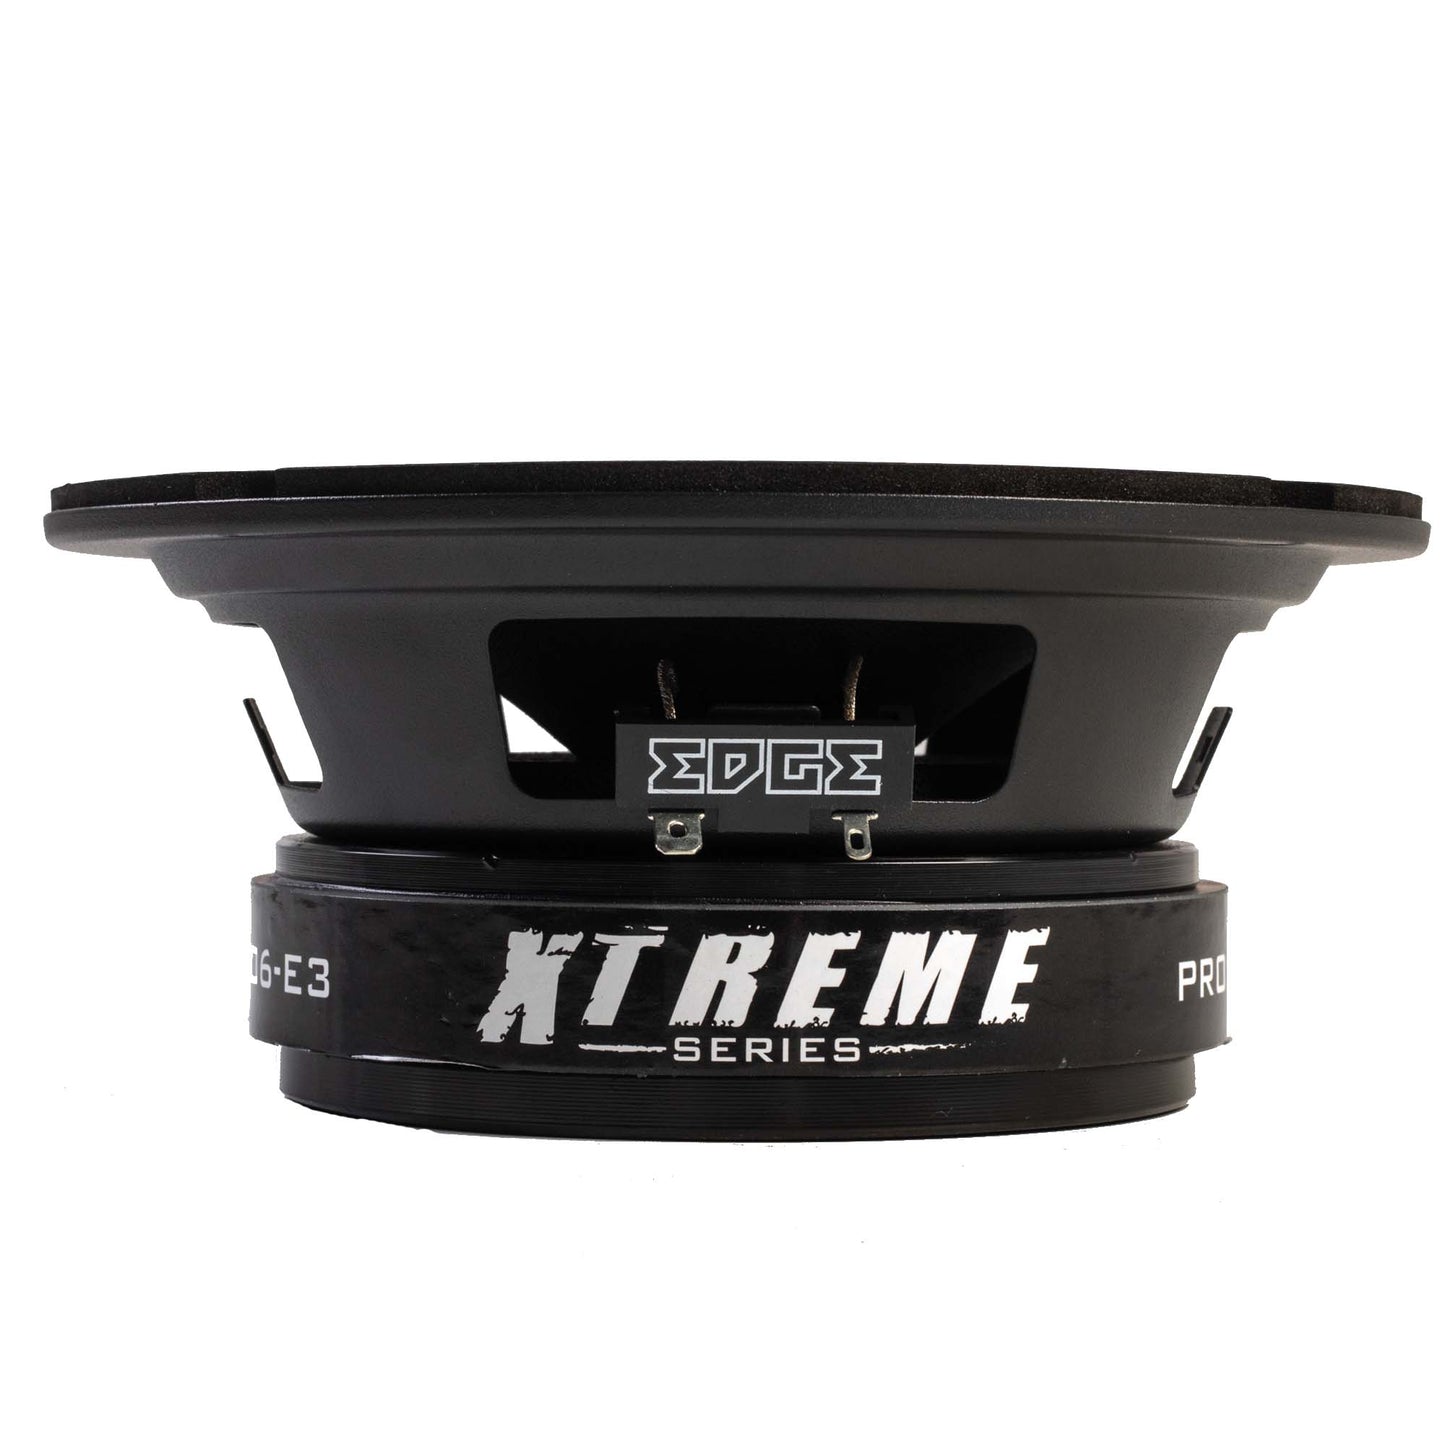 EDXPRO6-E3 | EDGE Xtreme Series 6.5 inch 600 watts 99dB Pro Audio Midrange Speakers - Pair